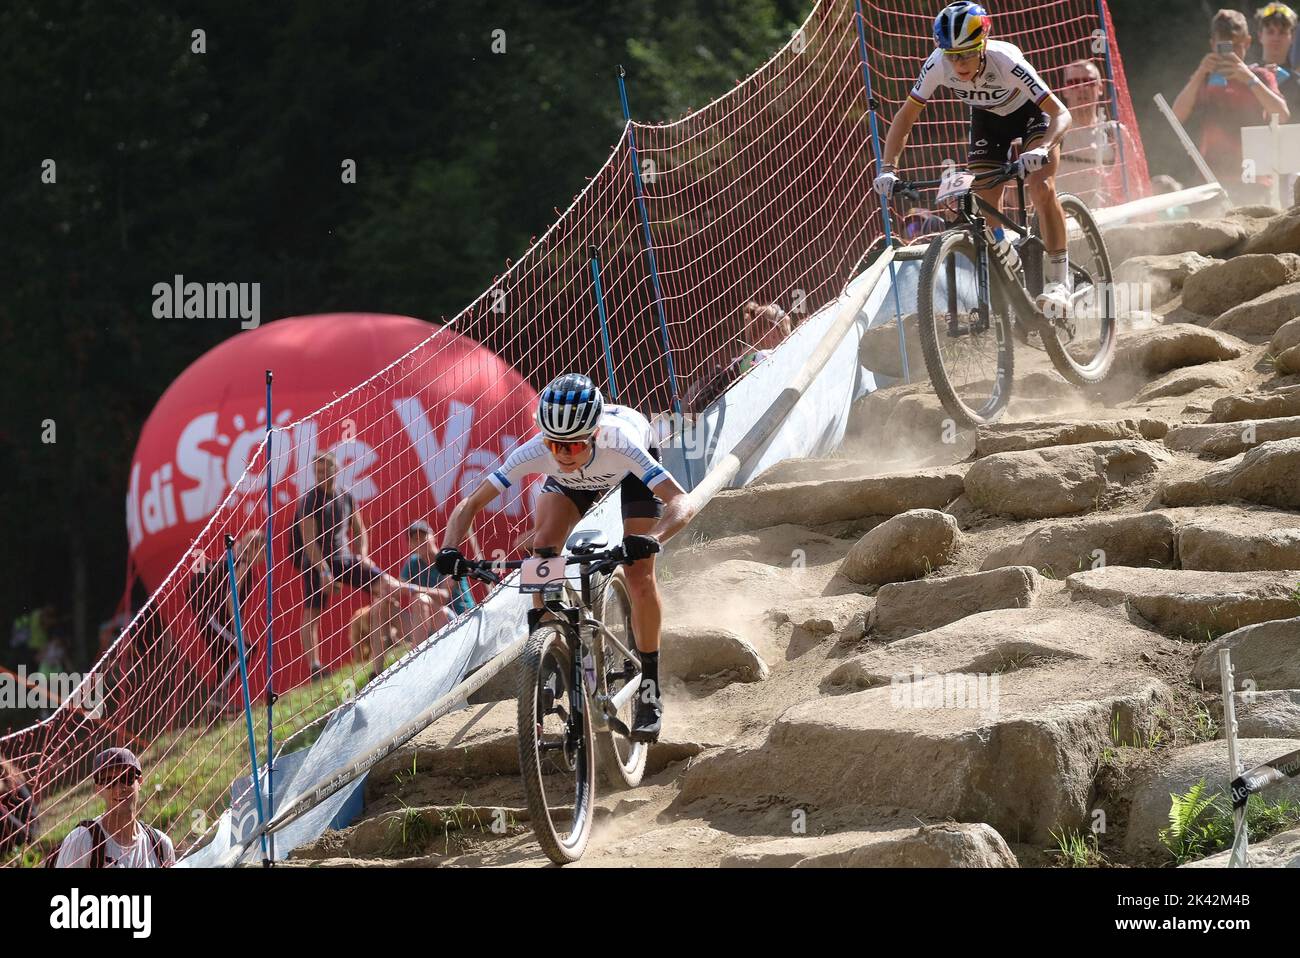 UCI Mountain Bike World Cup - Val di Sole 2022 - das große Finale - Elite Damen olympische Langlaufkategorie auf der Val di Sole MTB Strecke Stockfoto